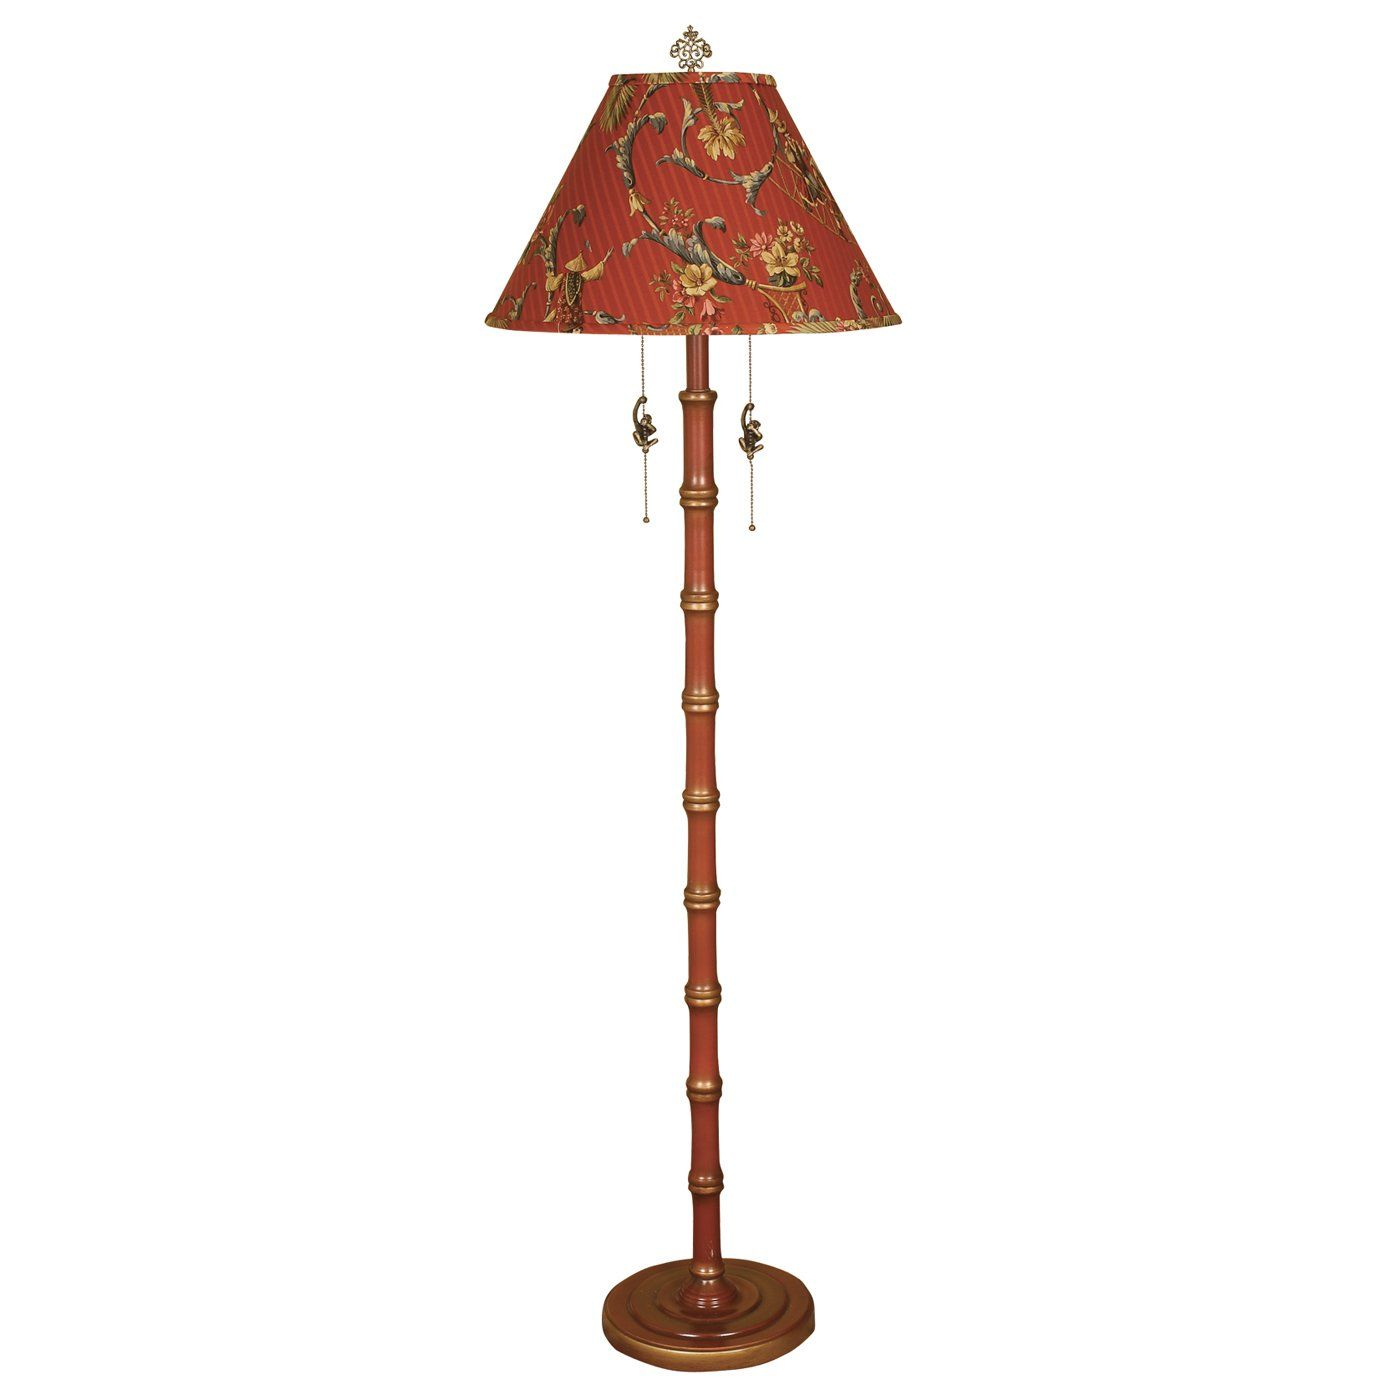 Mario Lamps 10f23 Floor Lamp Atg Stores Floor Lamp Red pertaining to measurements 1400 X 1400